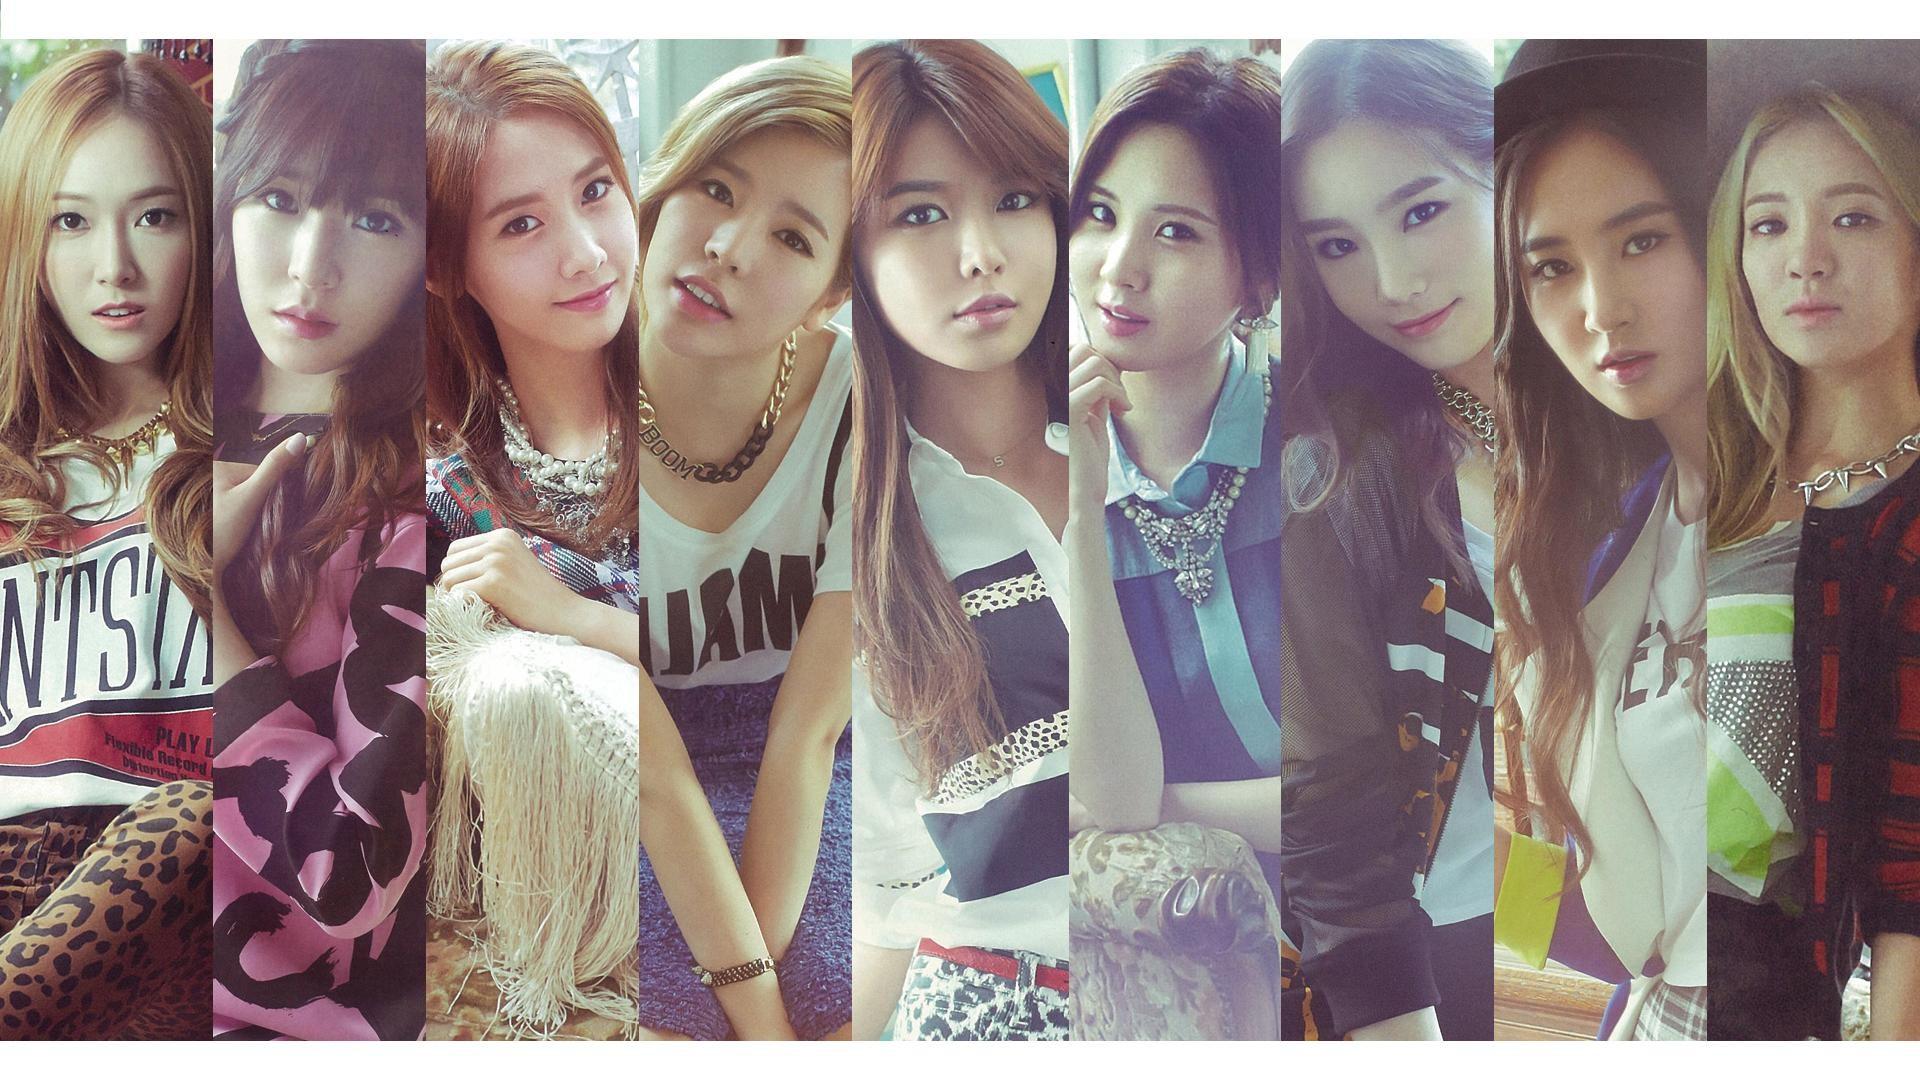 Snsd Kpop Musicians Singer Asian Model Girls generation Korean HD